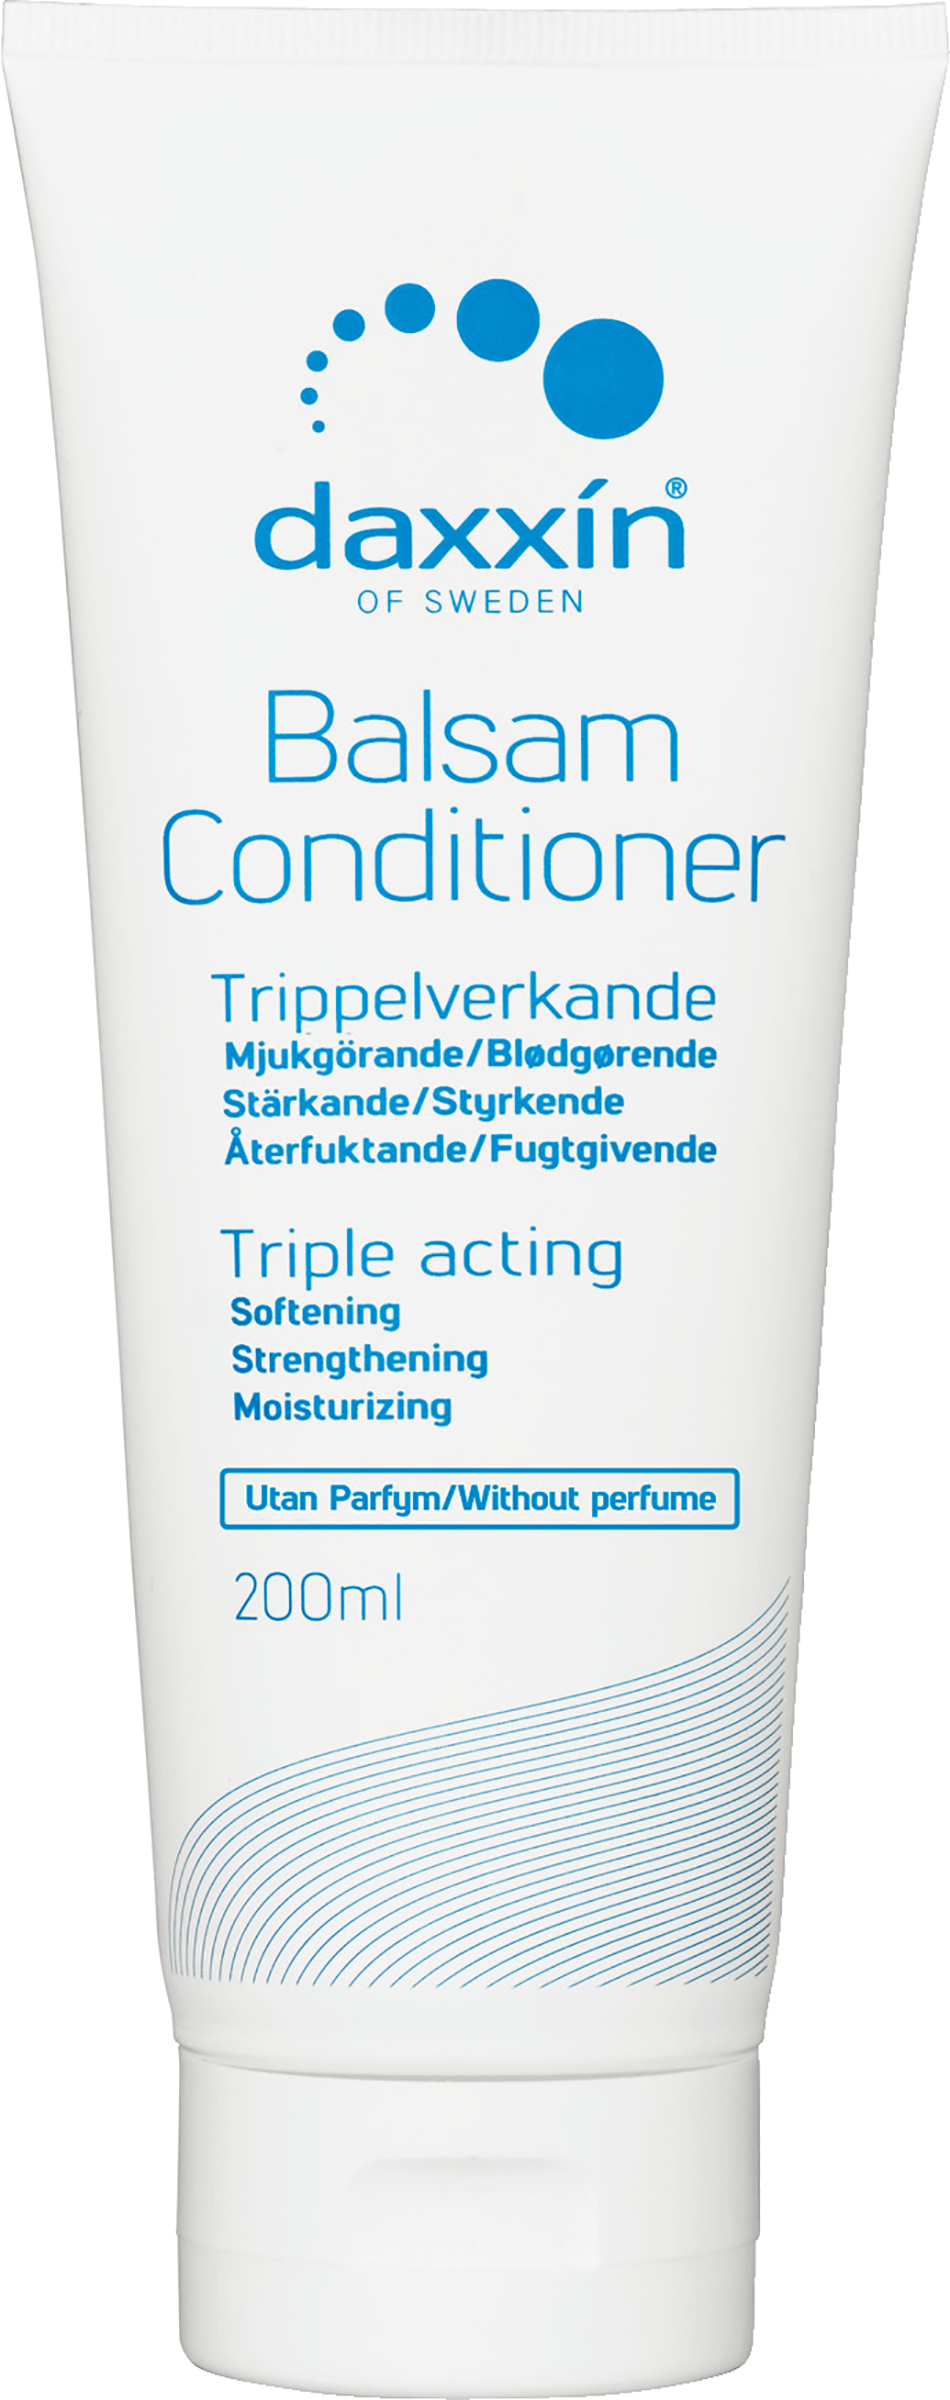 Daxxin Balsam Conditioner Oparf 200ml